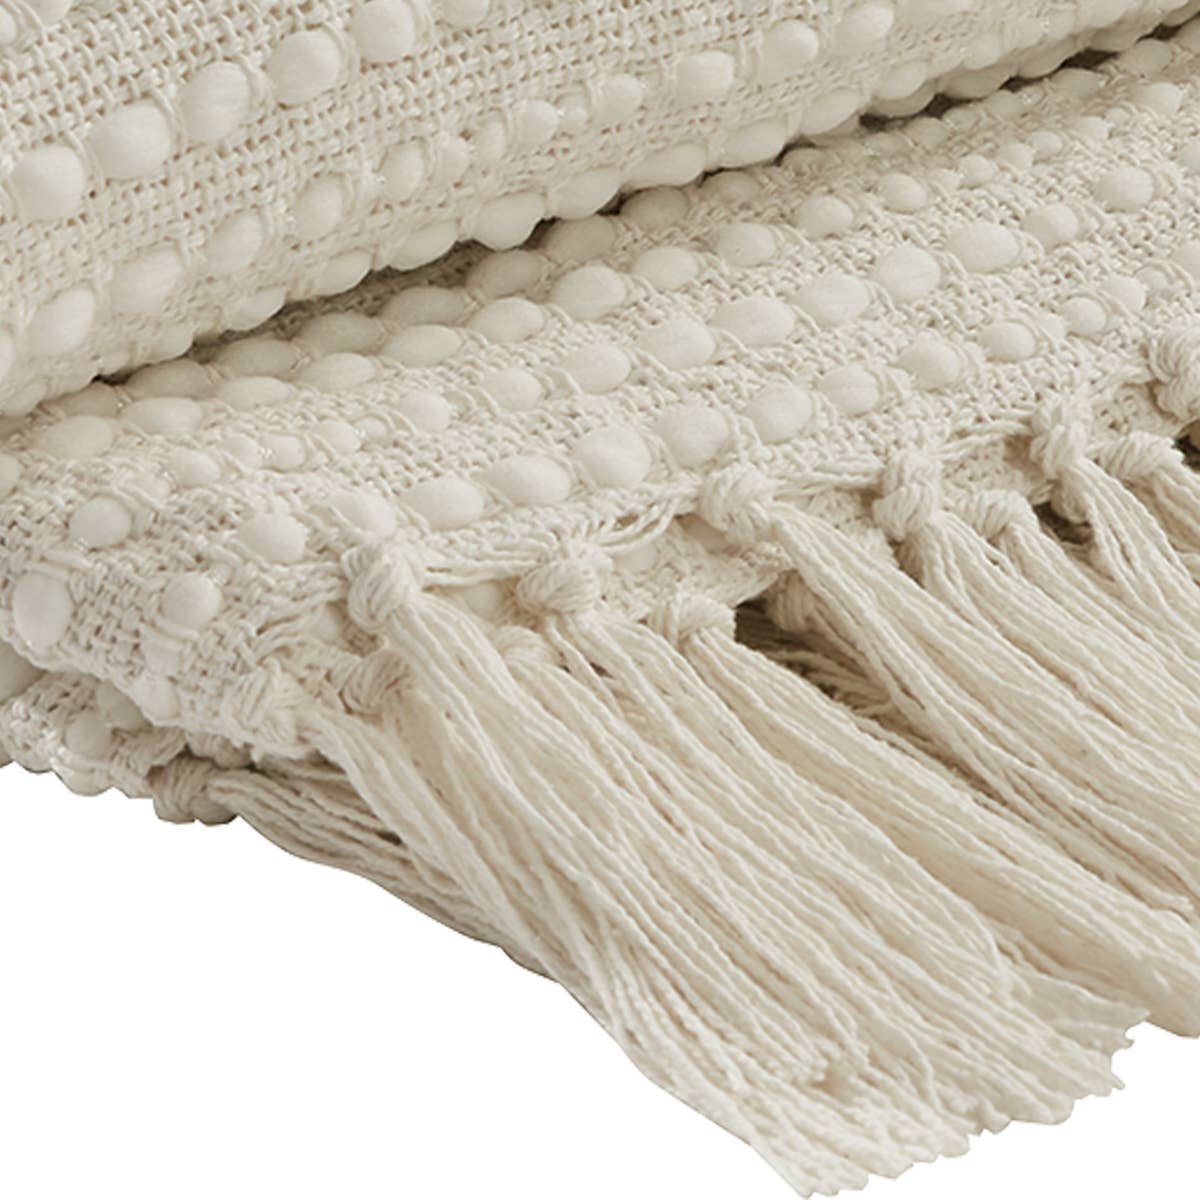 Blanket - Soft Cream Throw